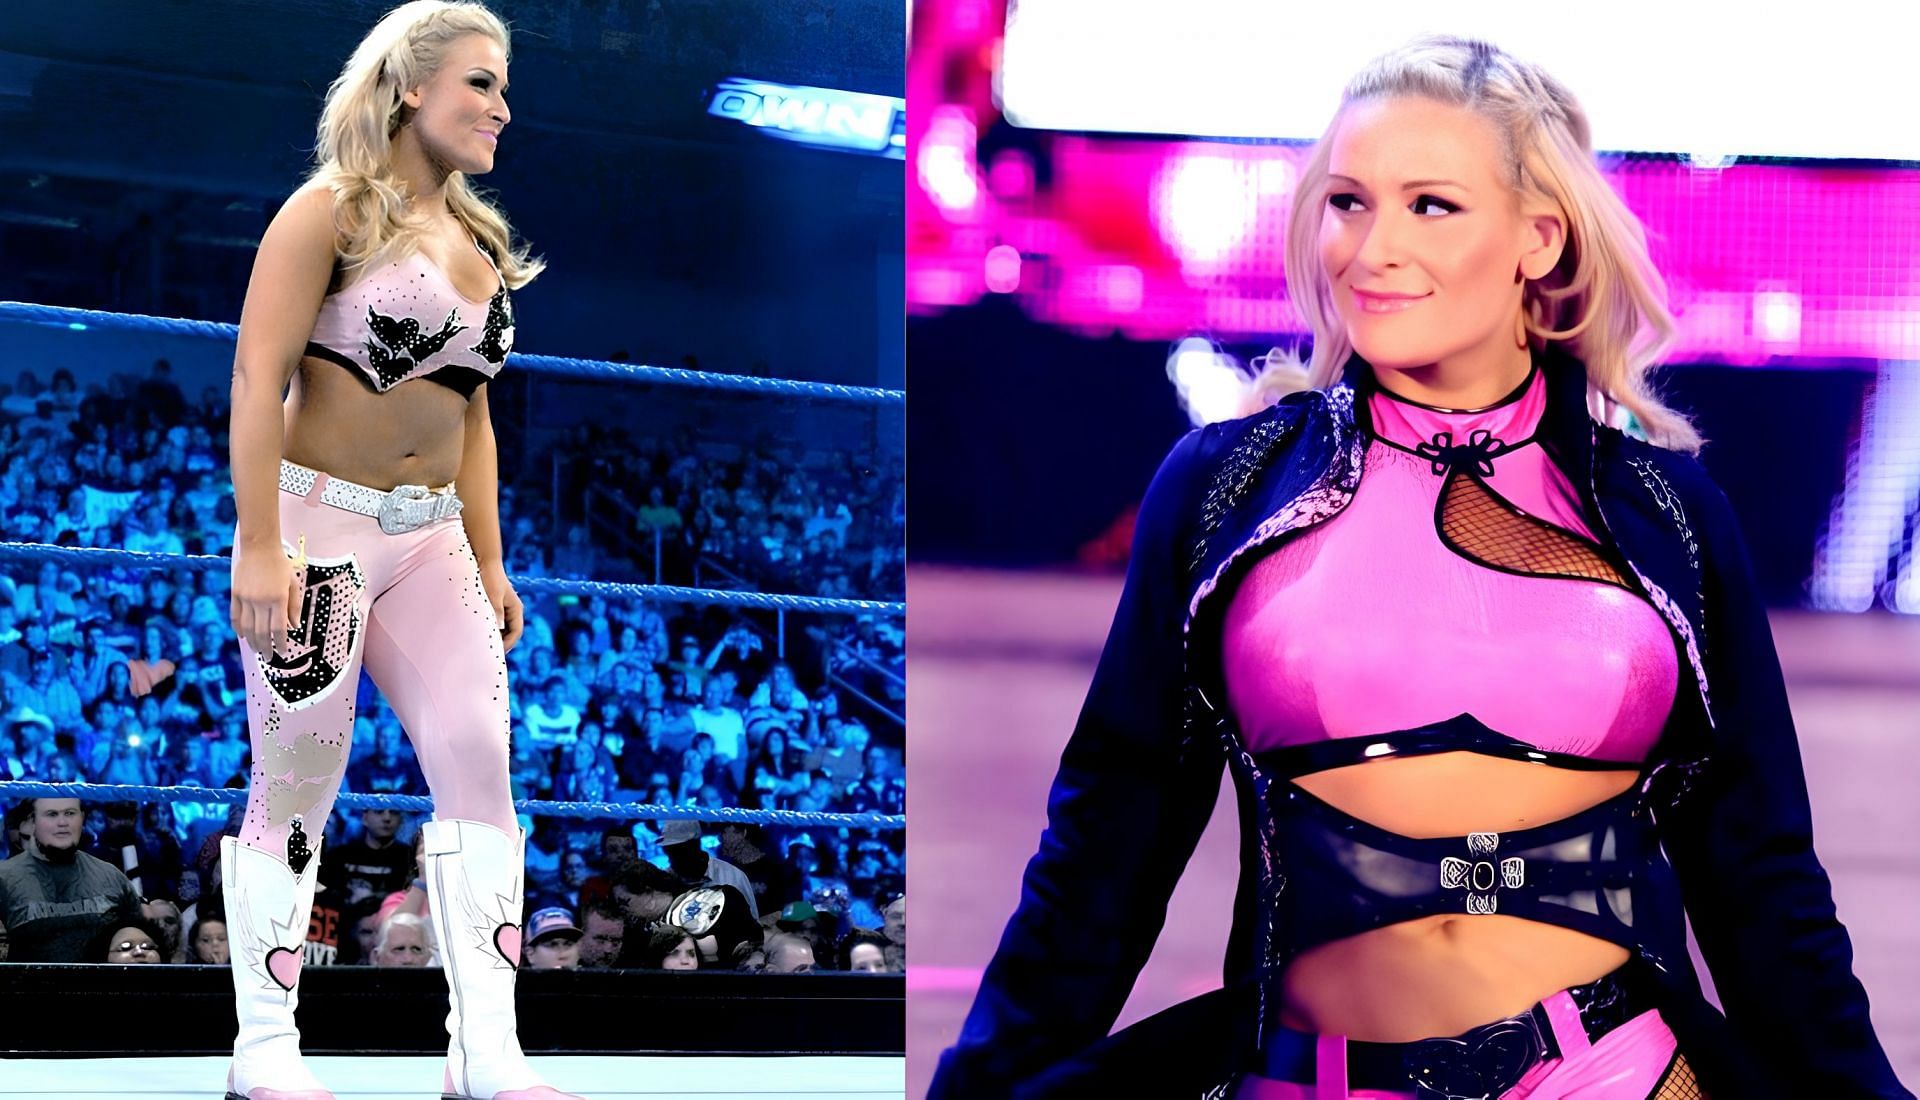 Natalya is a former SmackDown Women